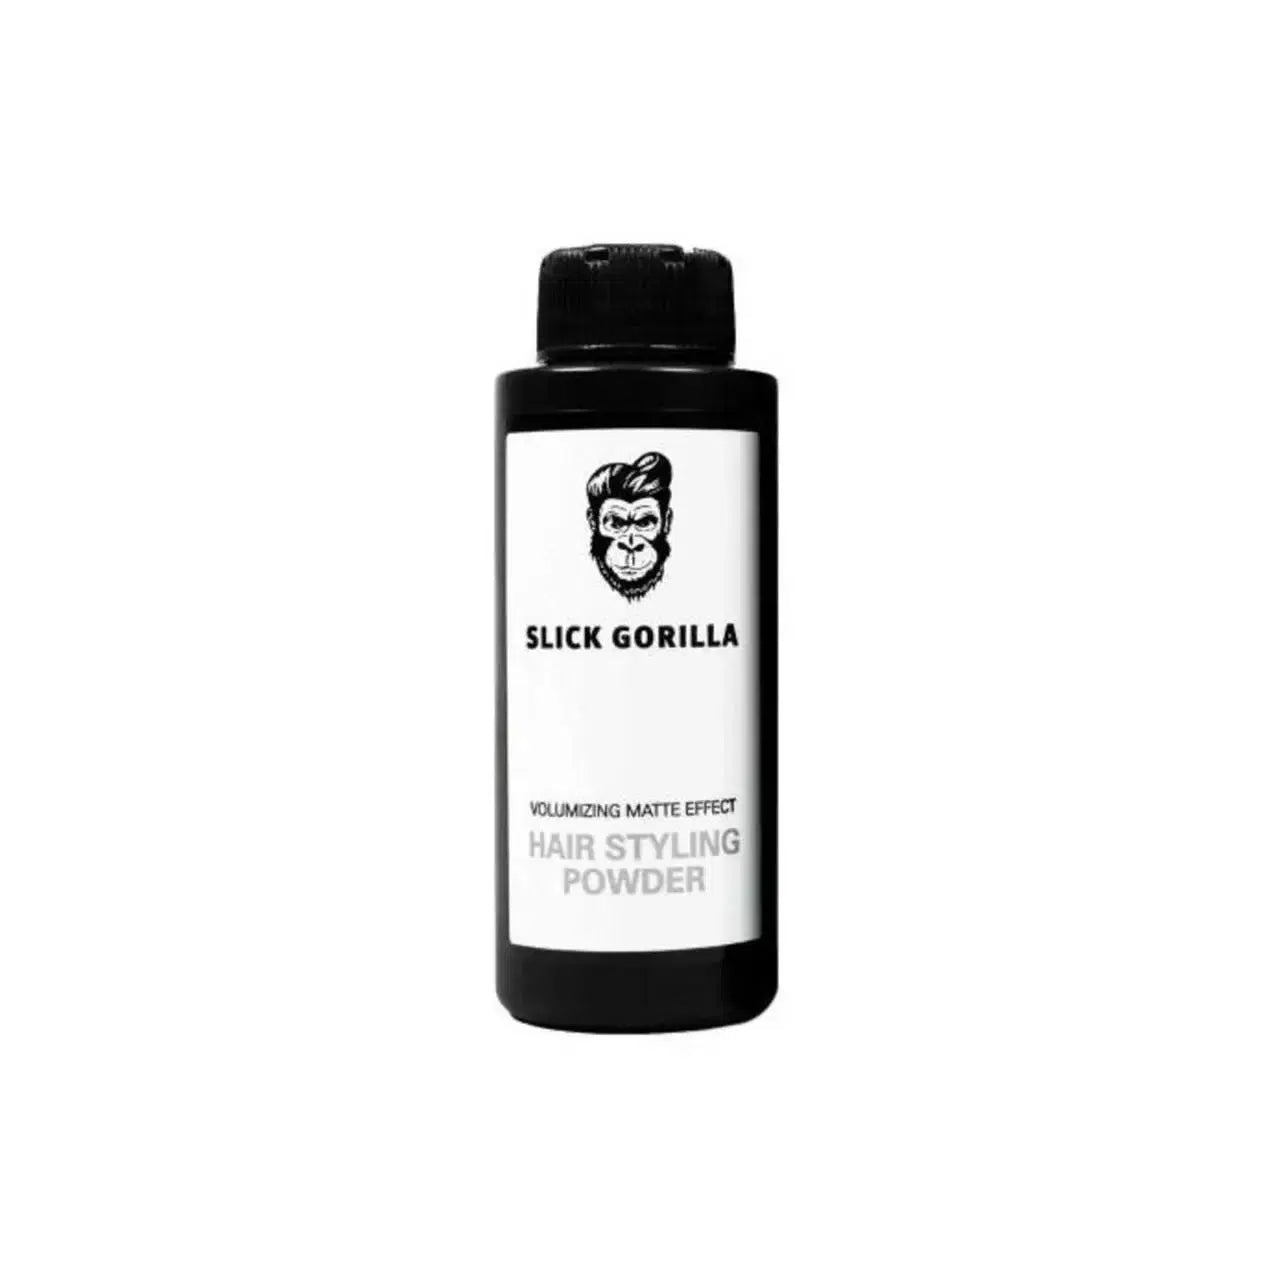 Пудра для укладання волосся Slick Gorilla Hair Styling Powder, 20 г-5060656210005-Slick Gorilla-Blade Runner Shop | Інтернет-магазин інструментів для перукарів (1)